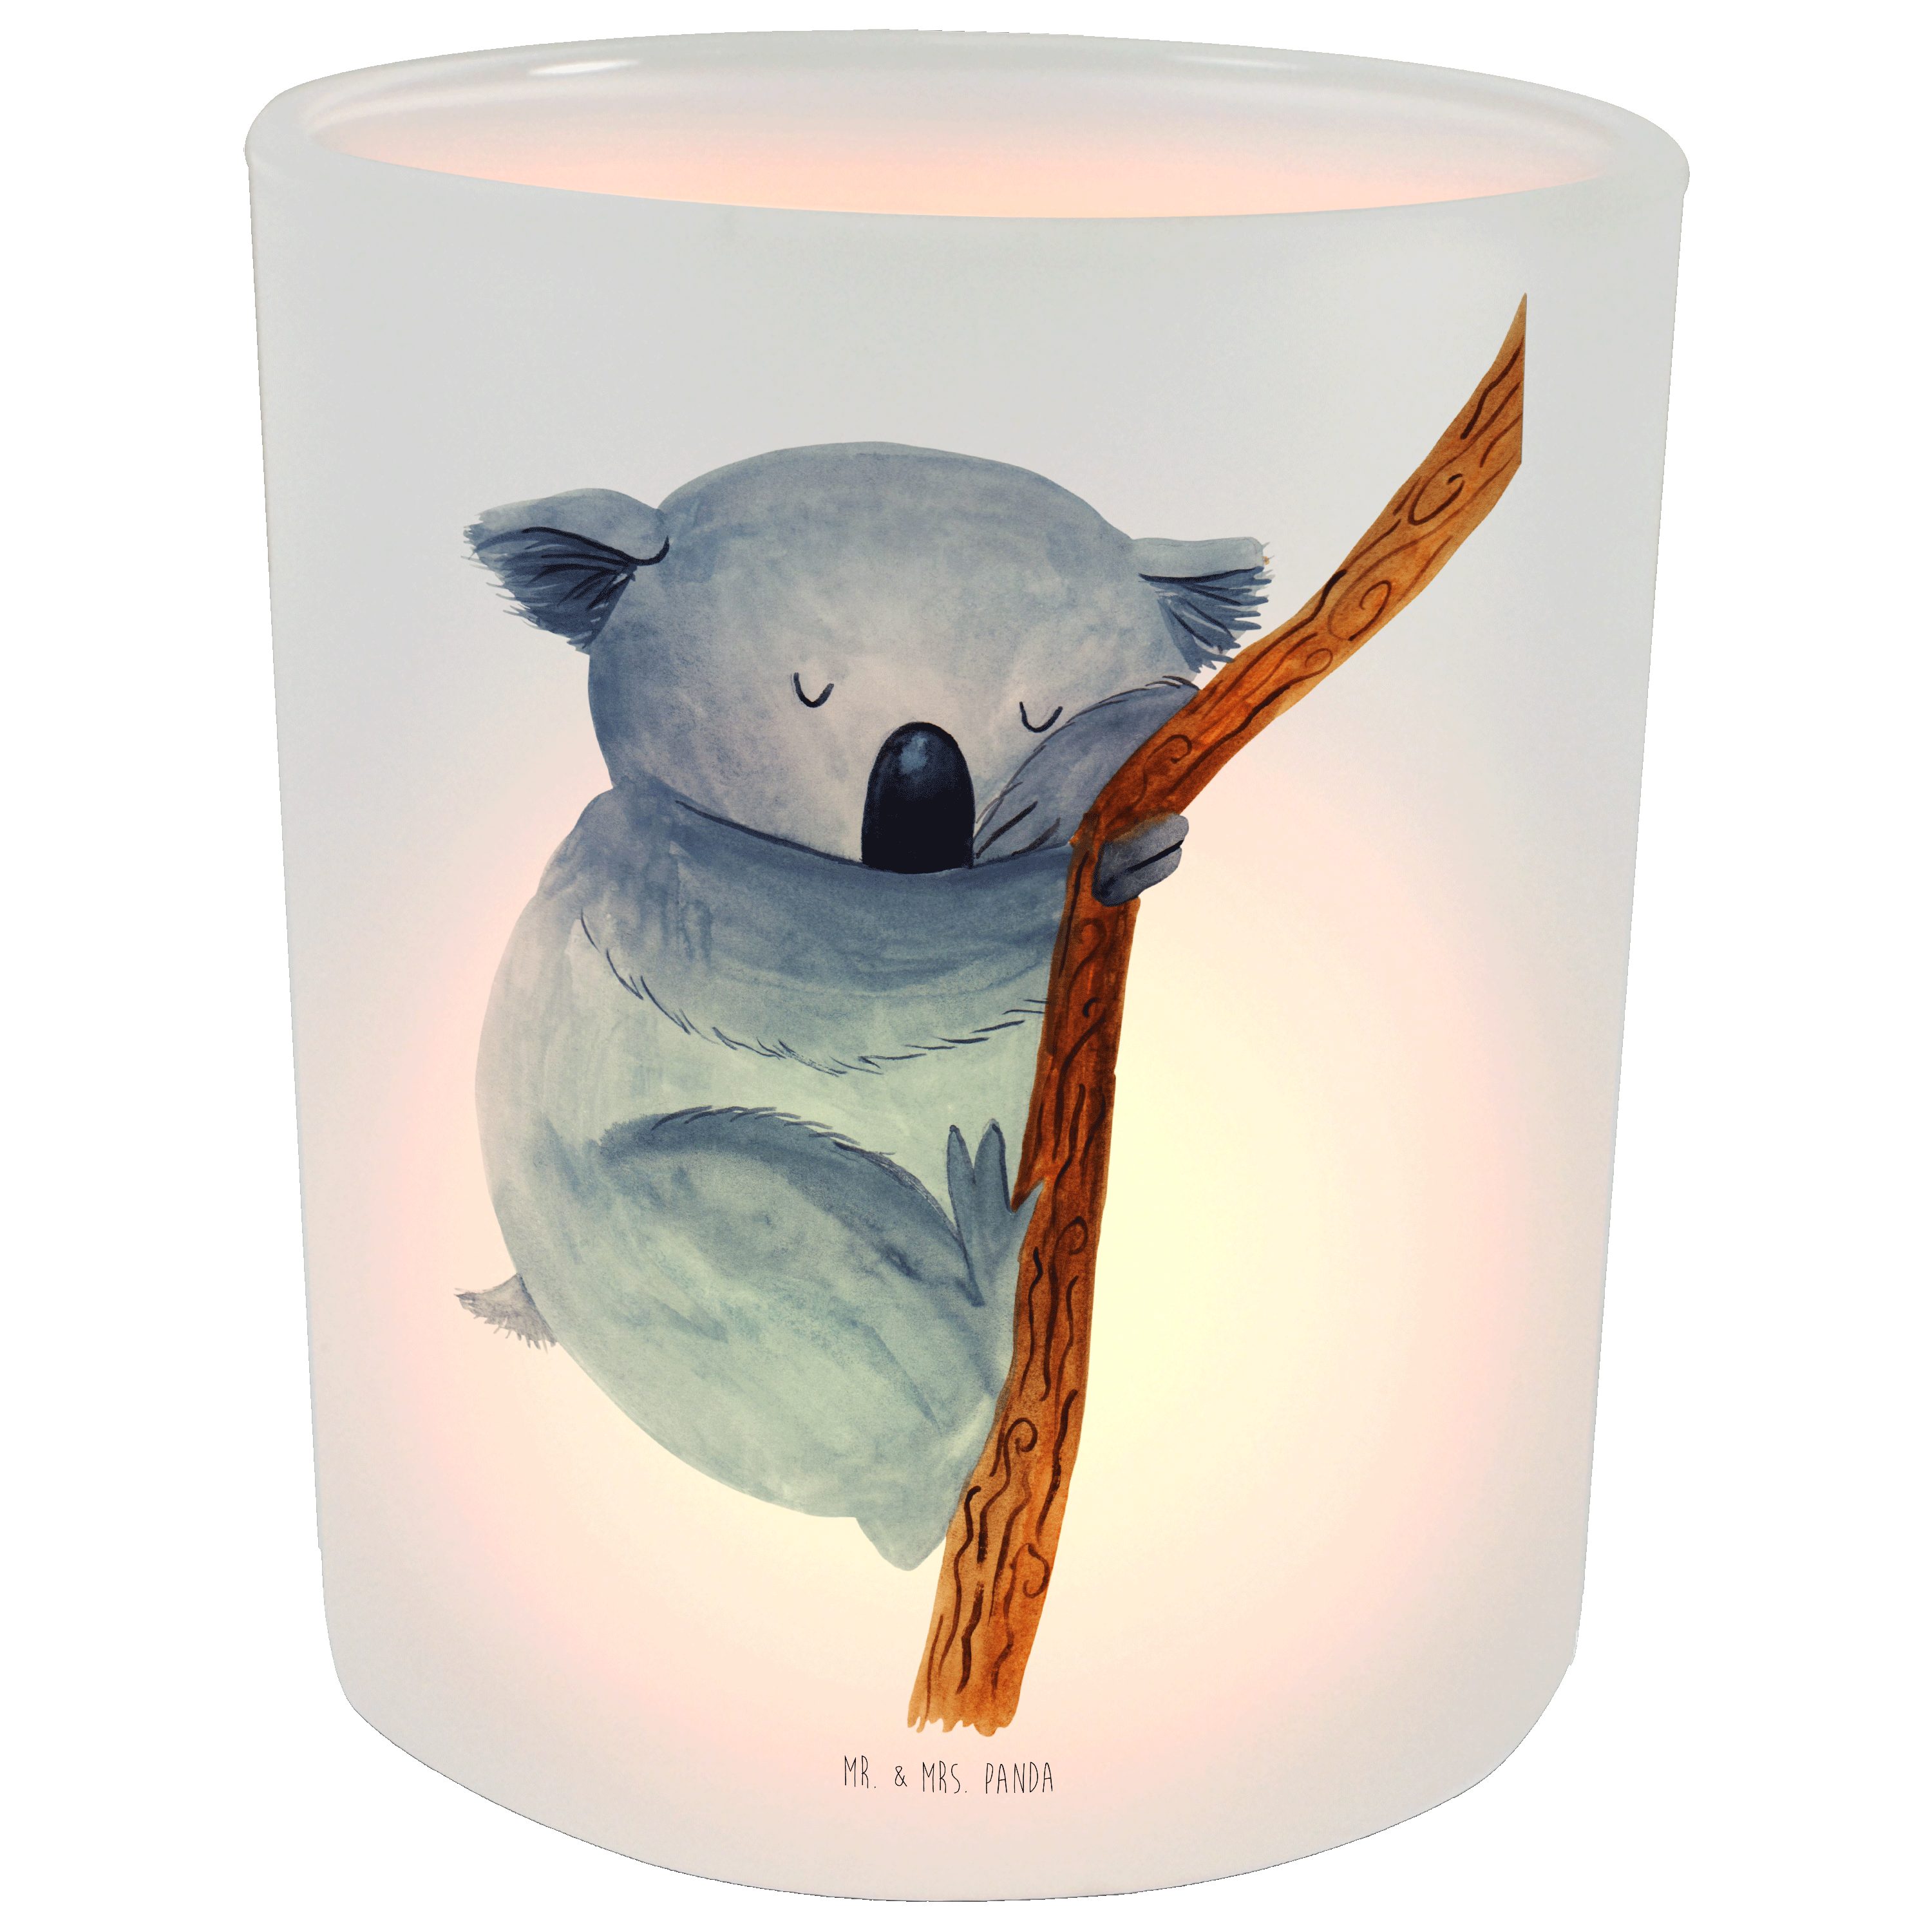 Mr. & Mrs. Panda Windlicht Kerzenglas, Geschenk, - Windlicht Transparent Tierm - Kerze, Koalabär St) (1